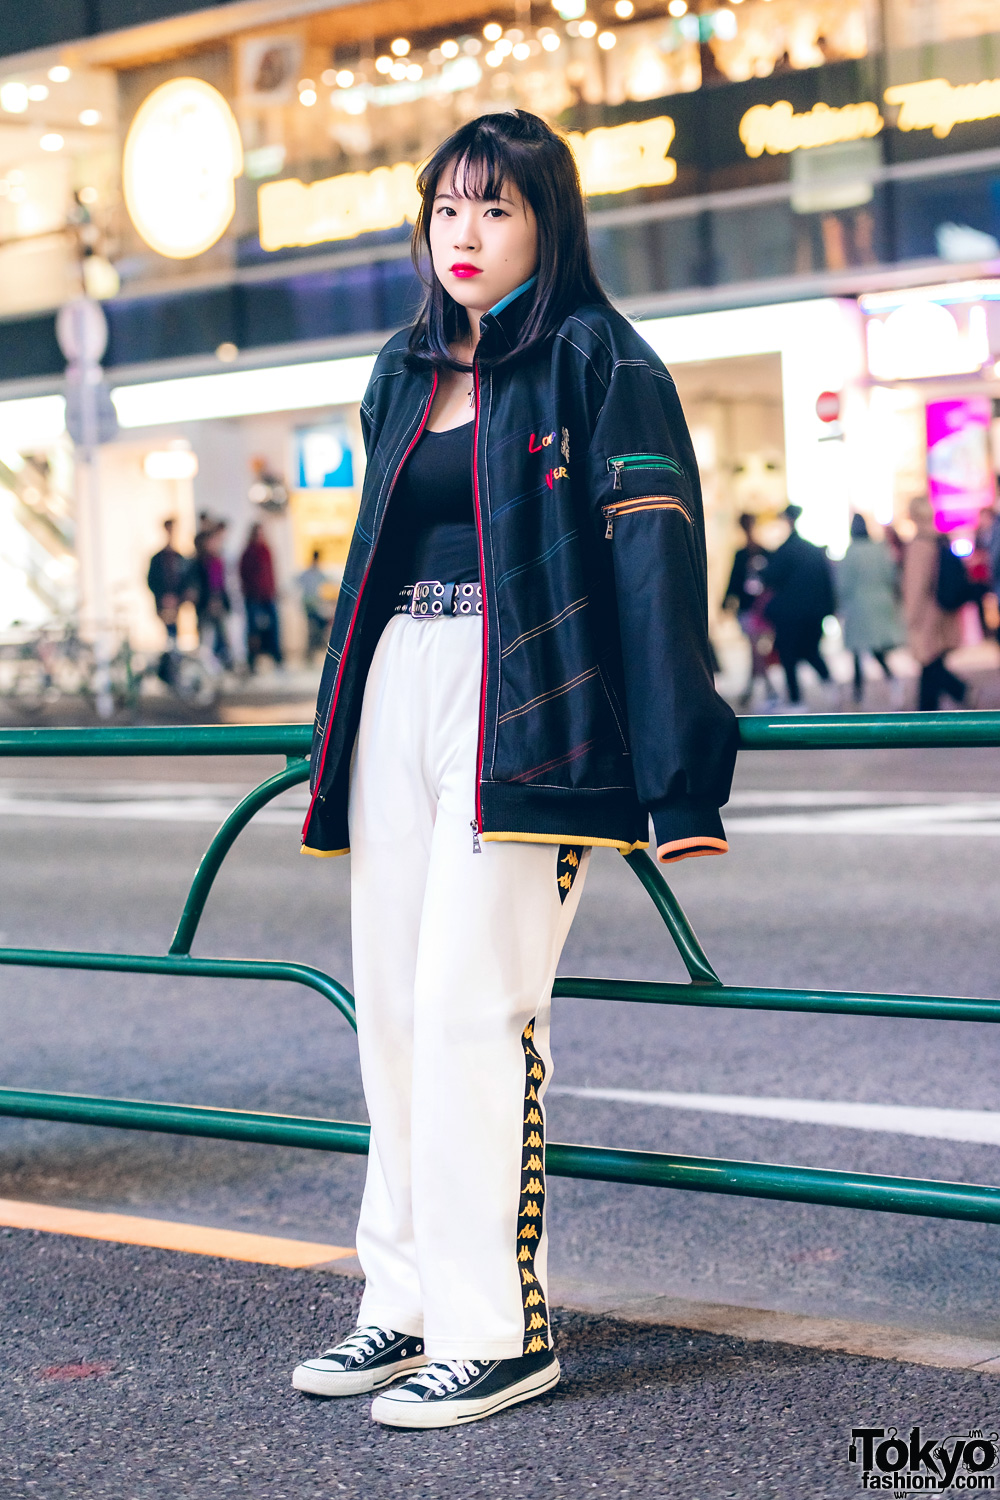 Harajuku Girl in Casual Sporty Style w/ Converse, Bubbles & Kappa